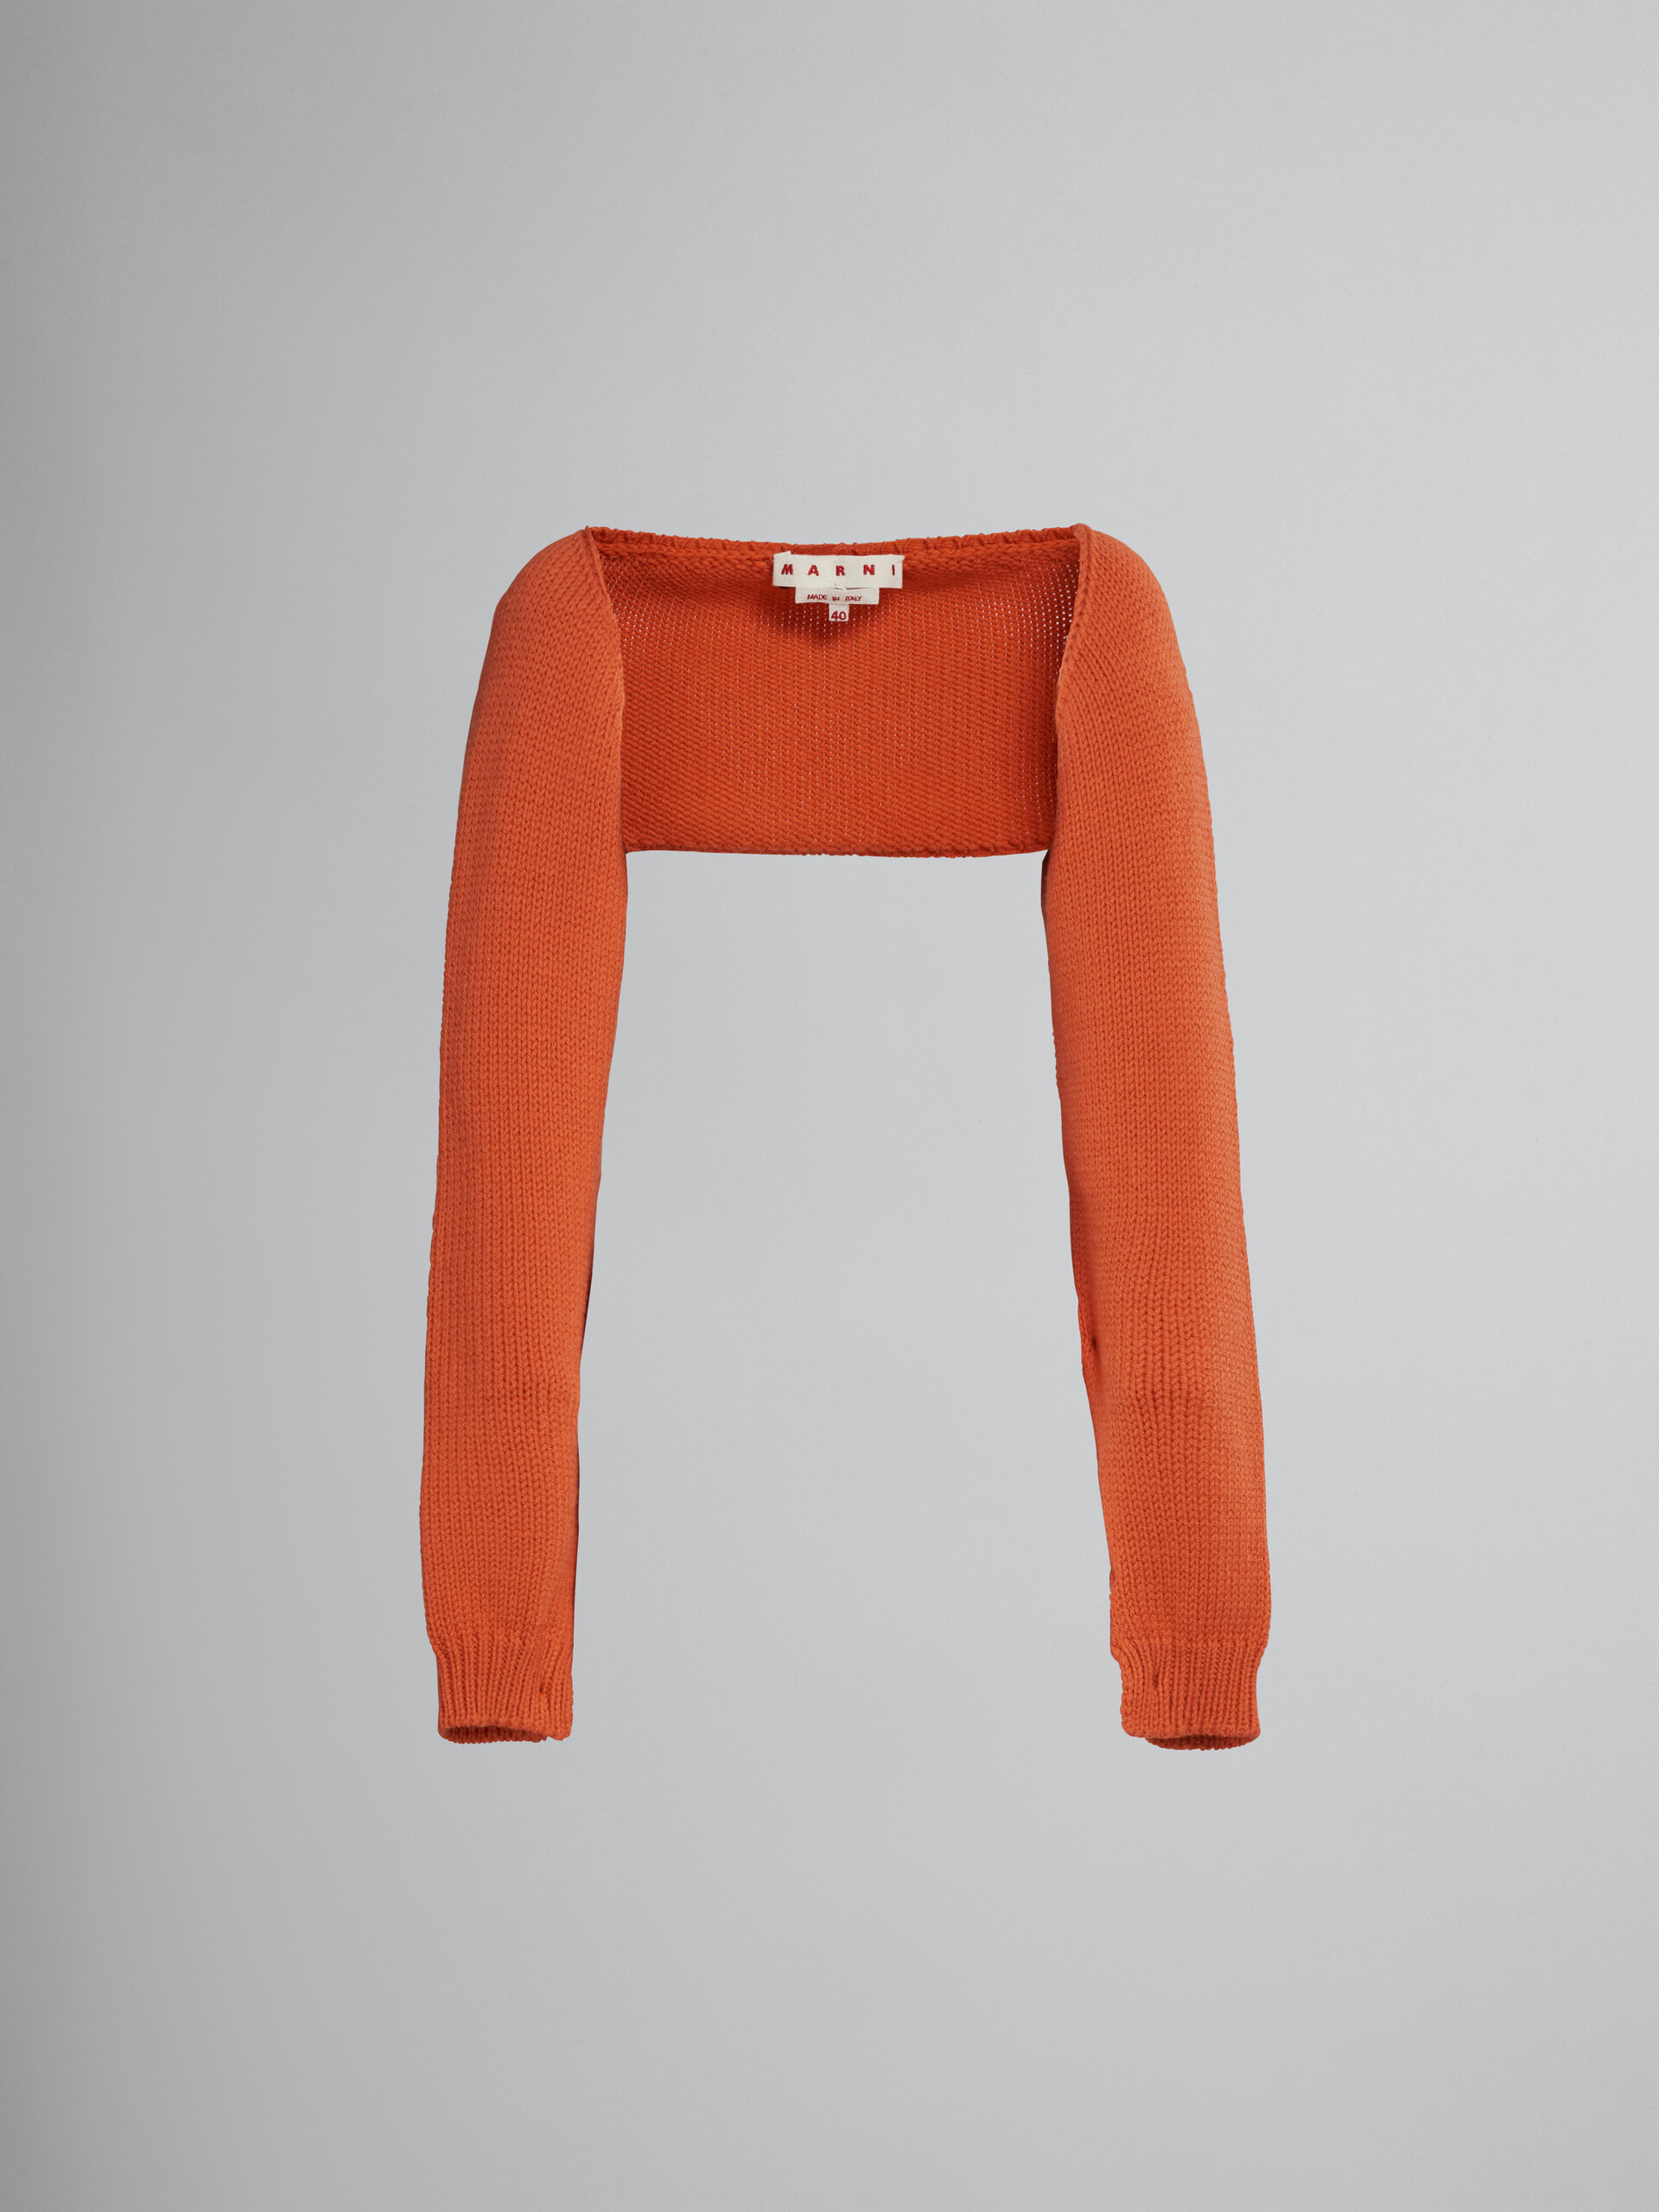 Orange wool shrug - Other accessories - Image 1